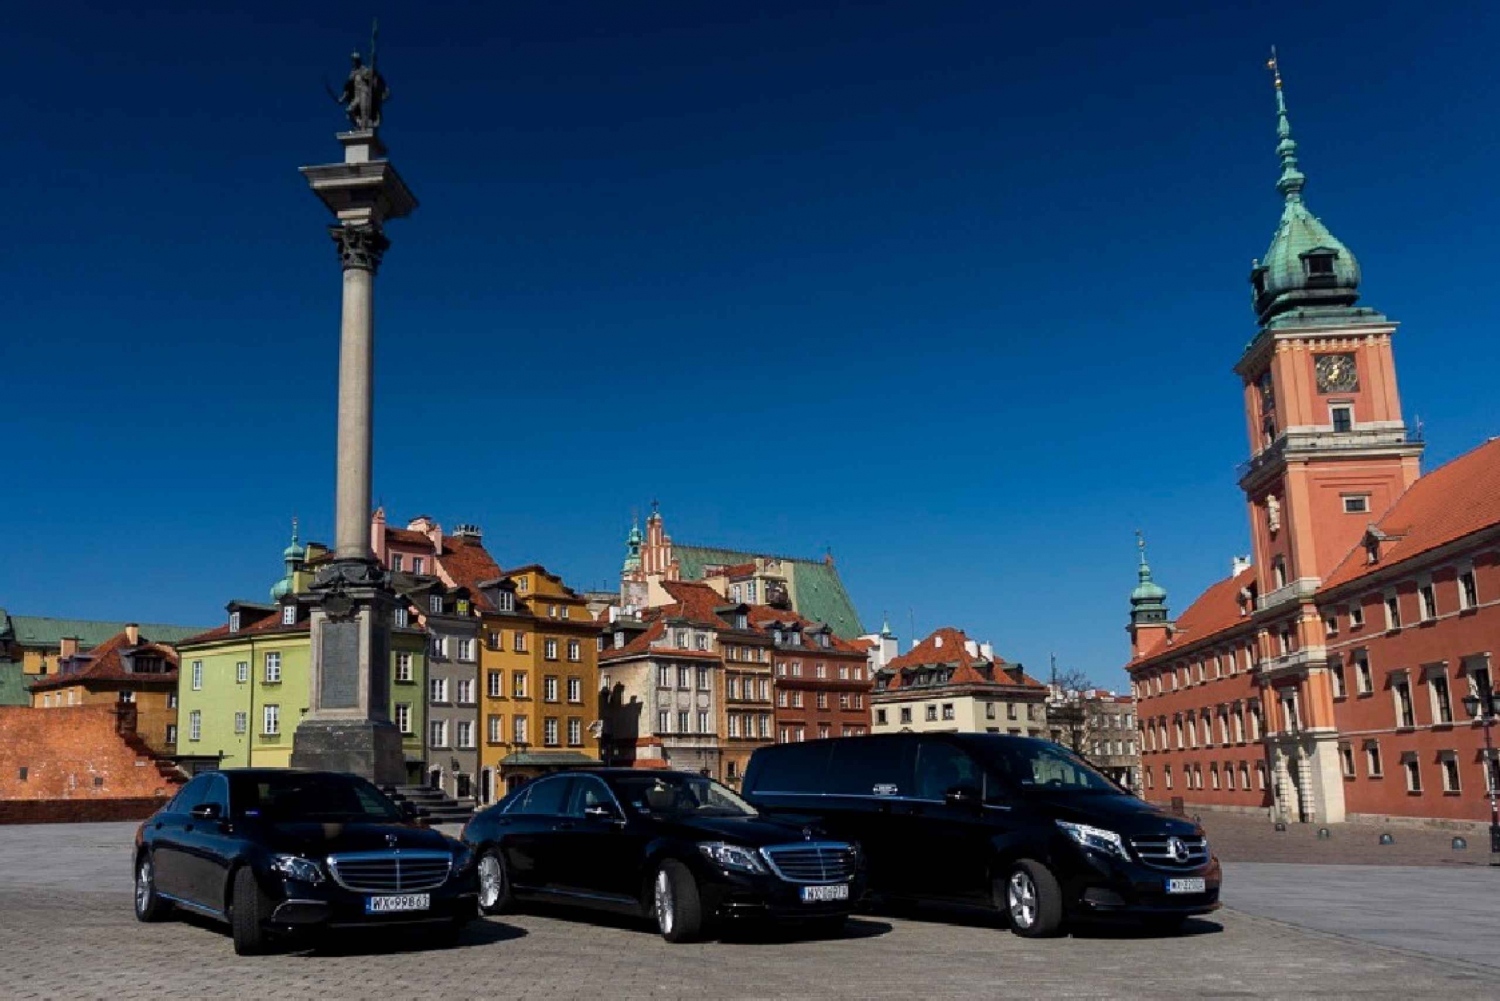 Warsaw to Krakow: Luxury Private Transfer